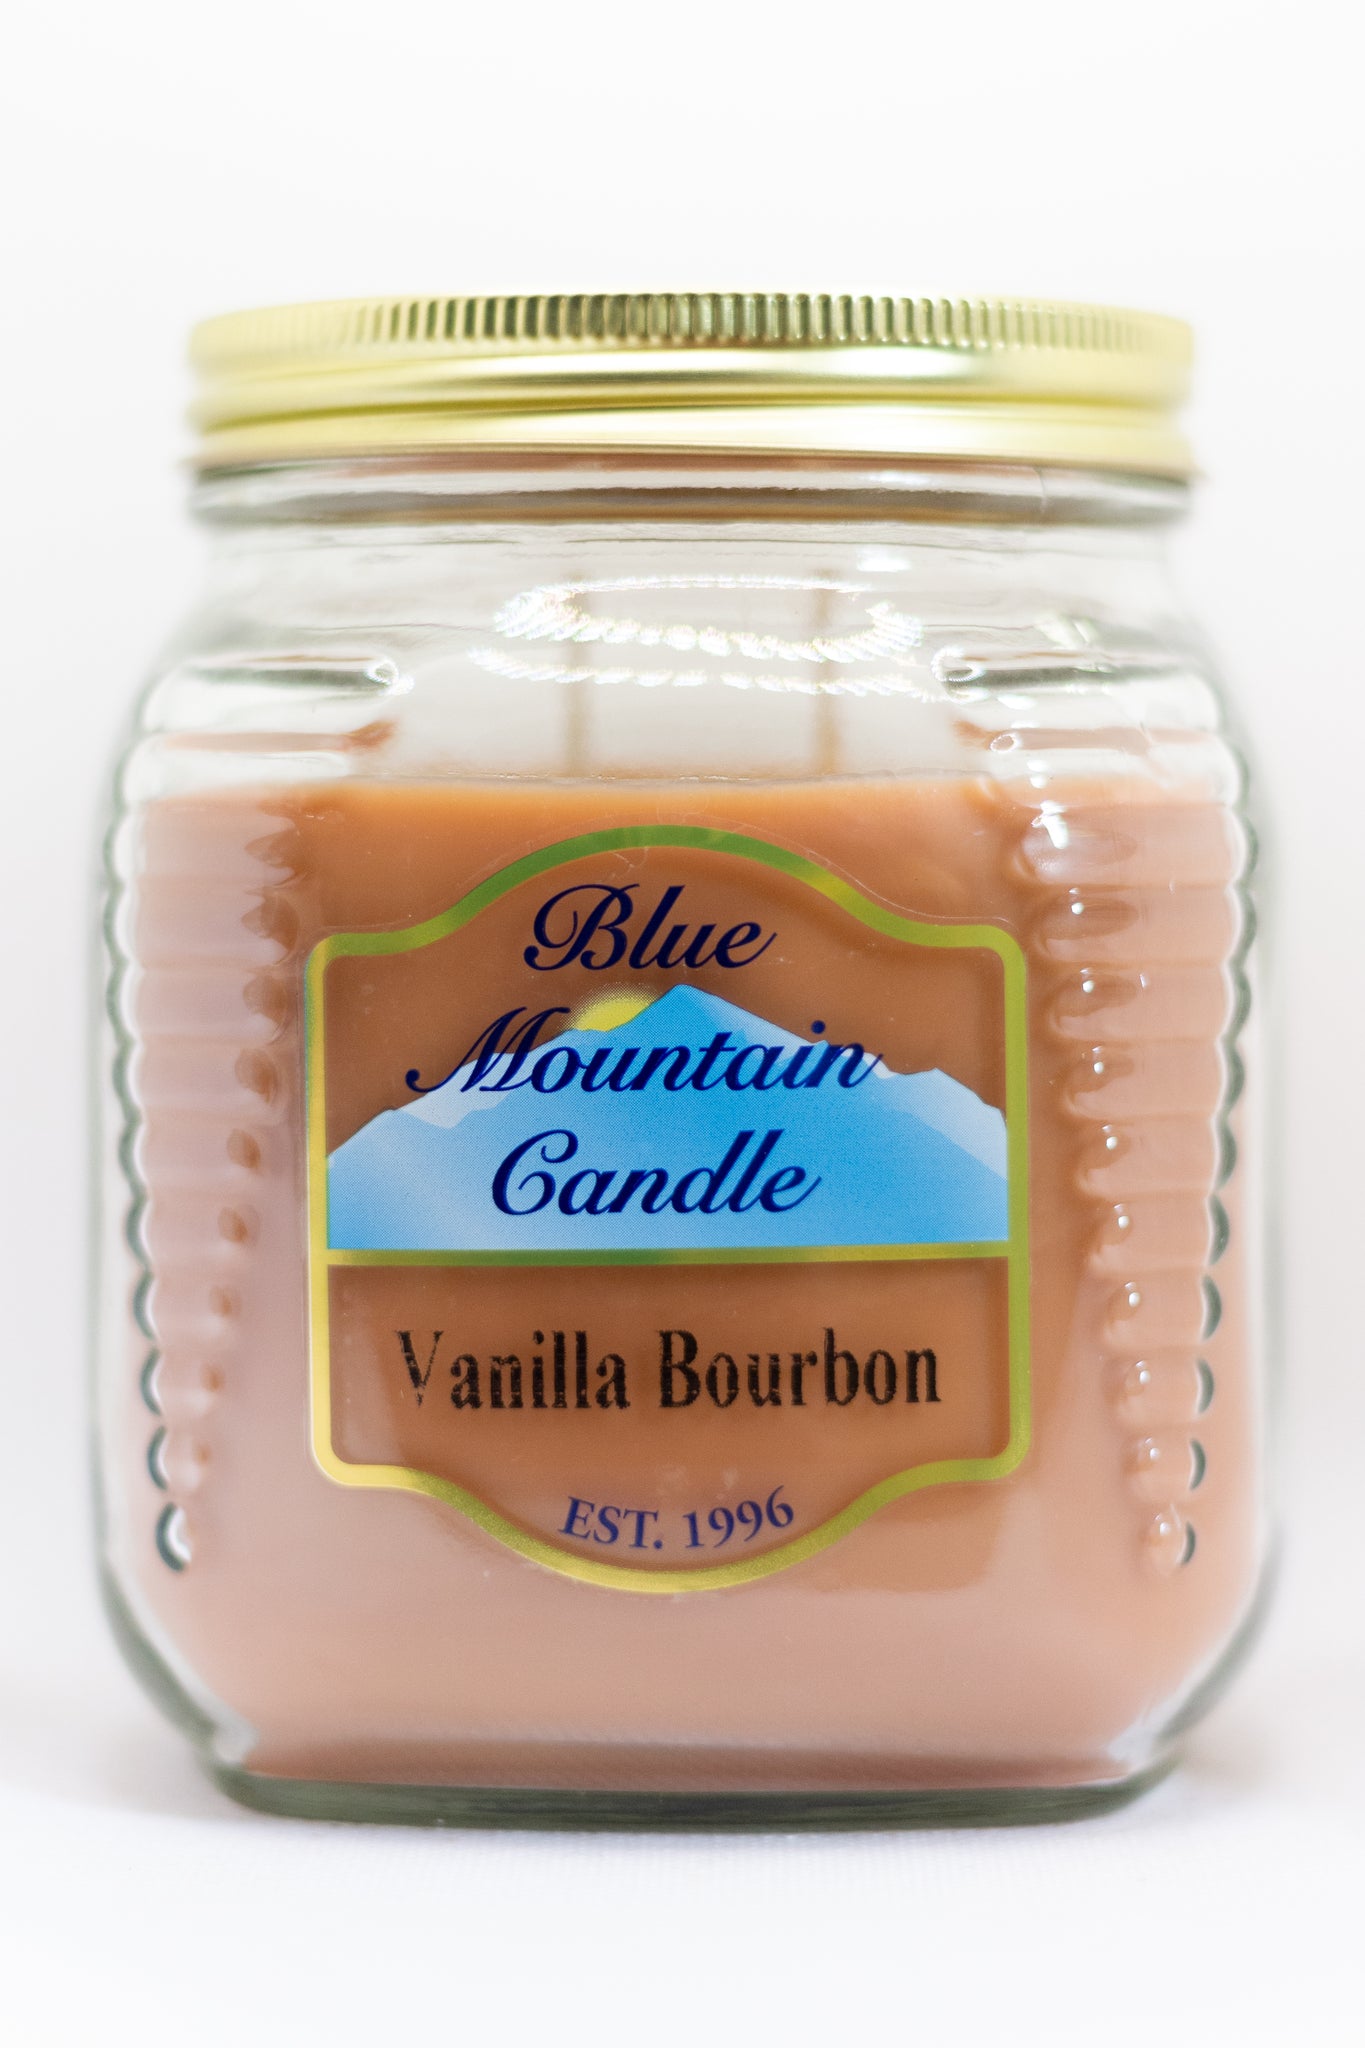 Bourbon Vanilla Body & Face Oil - Hydrate & Calm - 2 oz – kokoabotanics